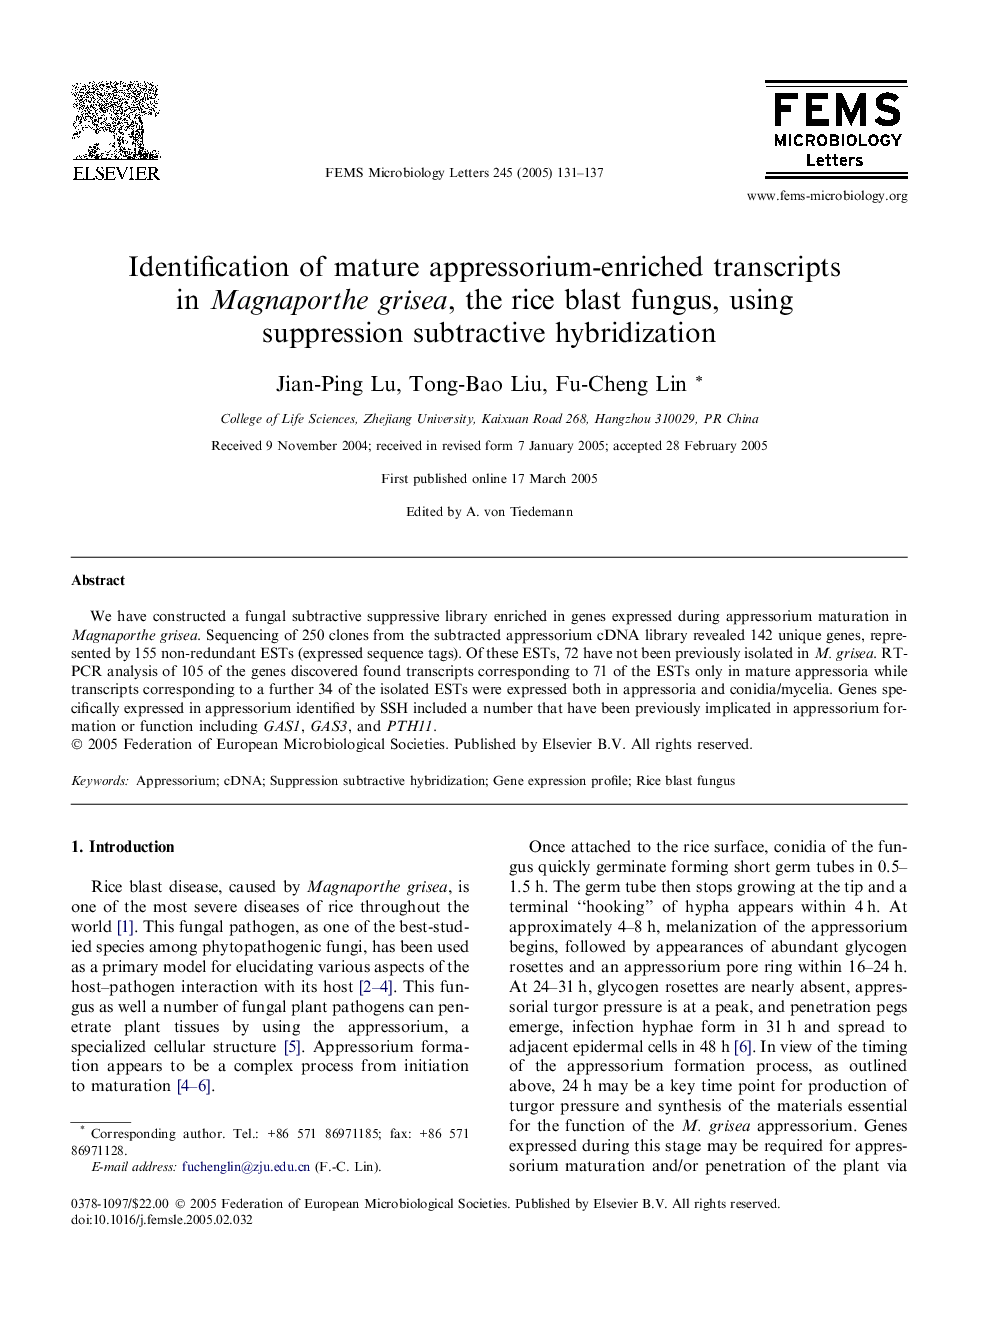 Identification of mature appressorium-enriched transcripts in Magnaporthe grisea, the rice blast fungus, using suppression subtractive hybridization